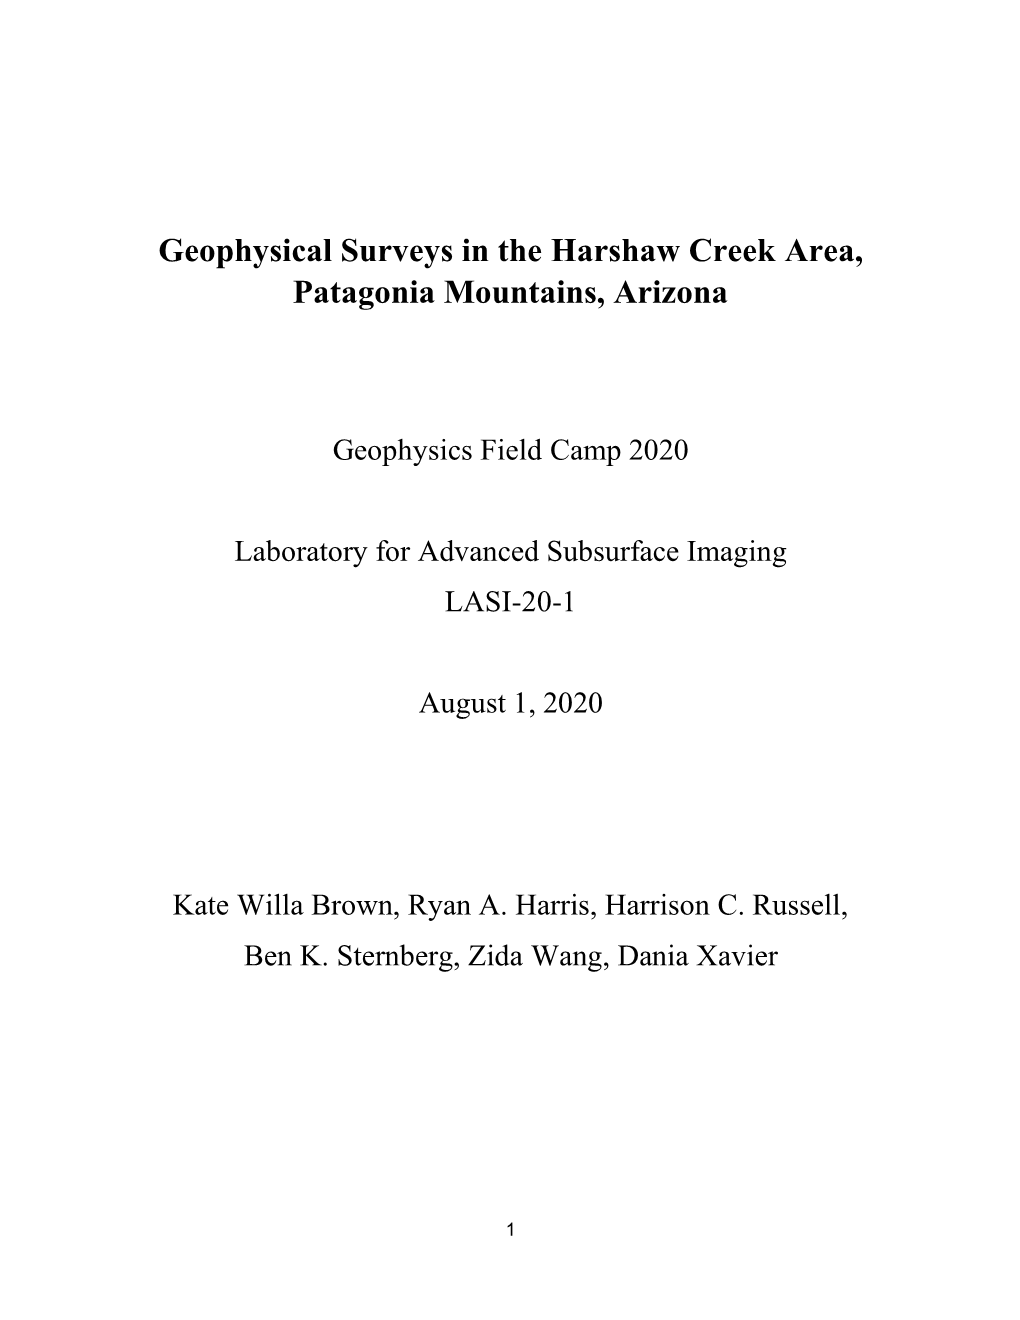 Geophysical Surveys in the Harshaw Creek Area, Patagonia Mountains, Arizona